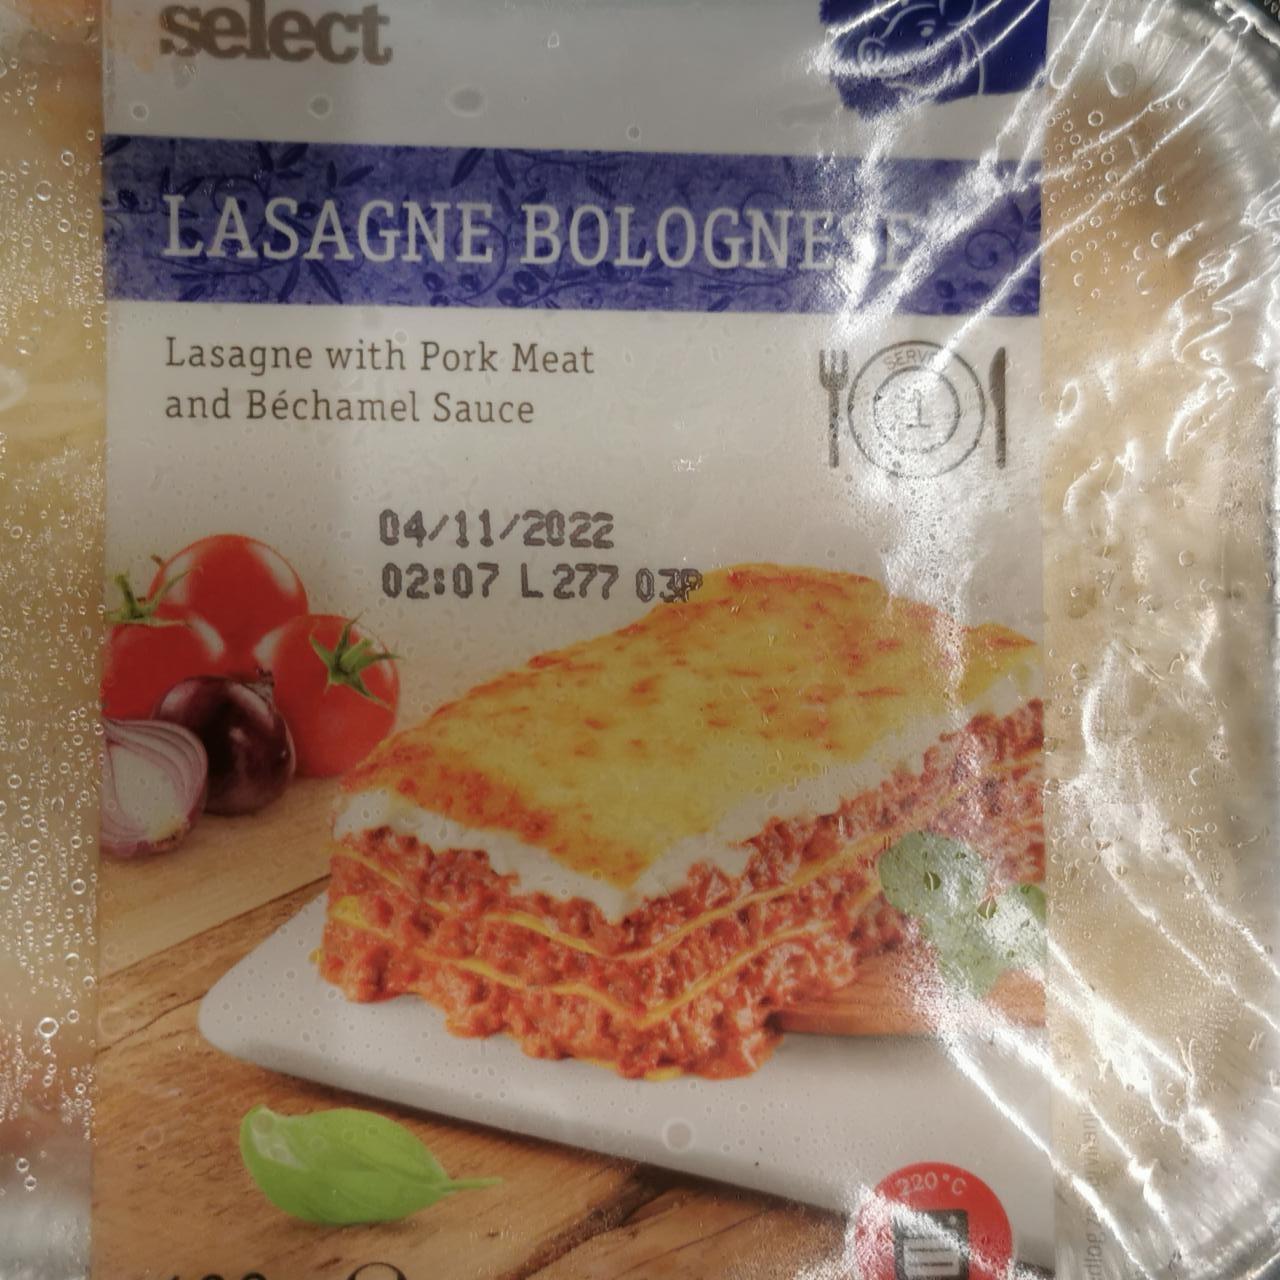 Képek - Lasagne Bolognese with pork meat and béchamel sauce Chef Select